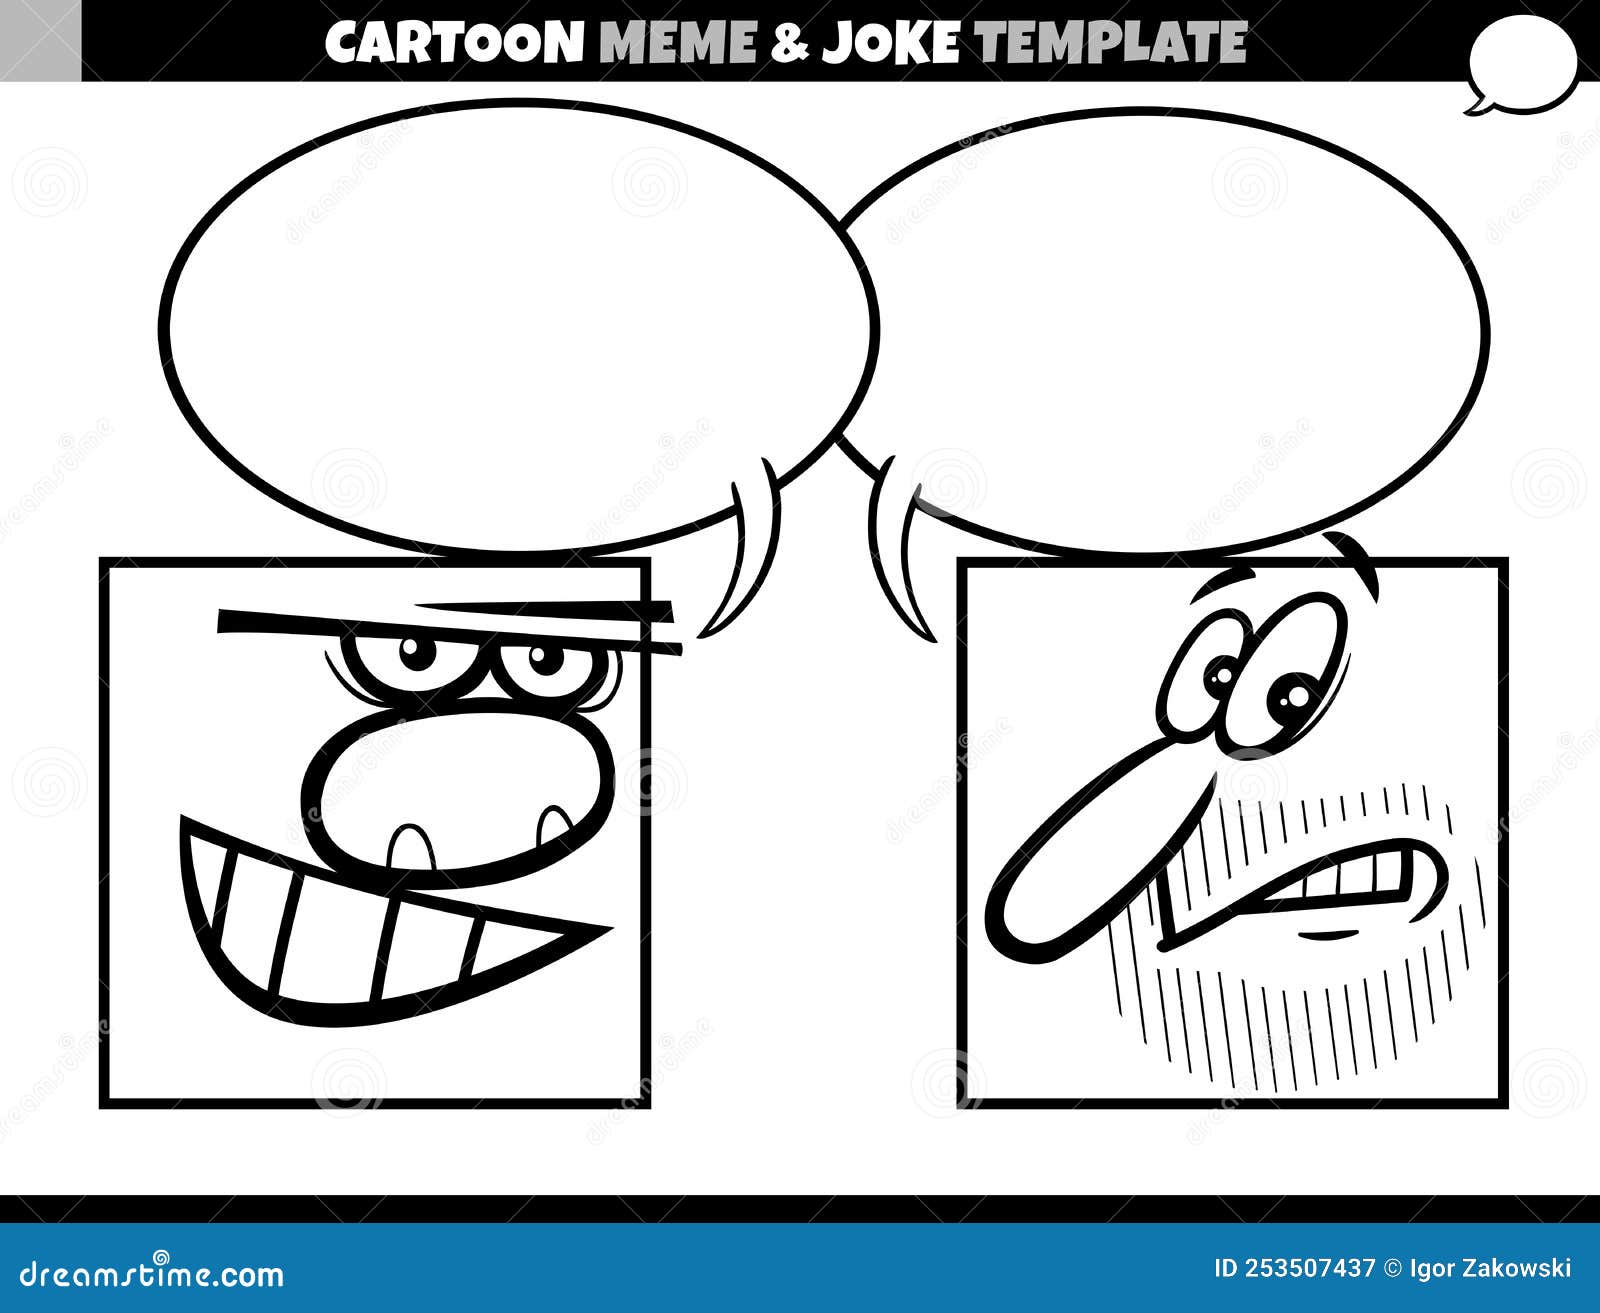 Cartoon Meme Template With Comic Characters | CartoonDealer.com #253507437